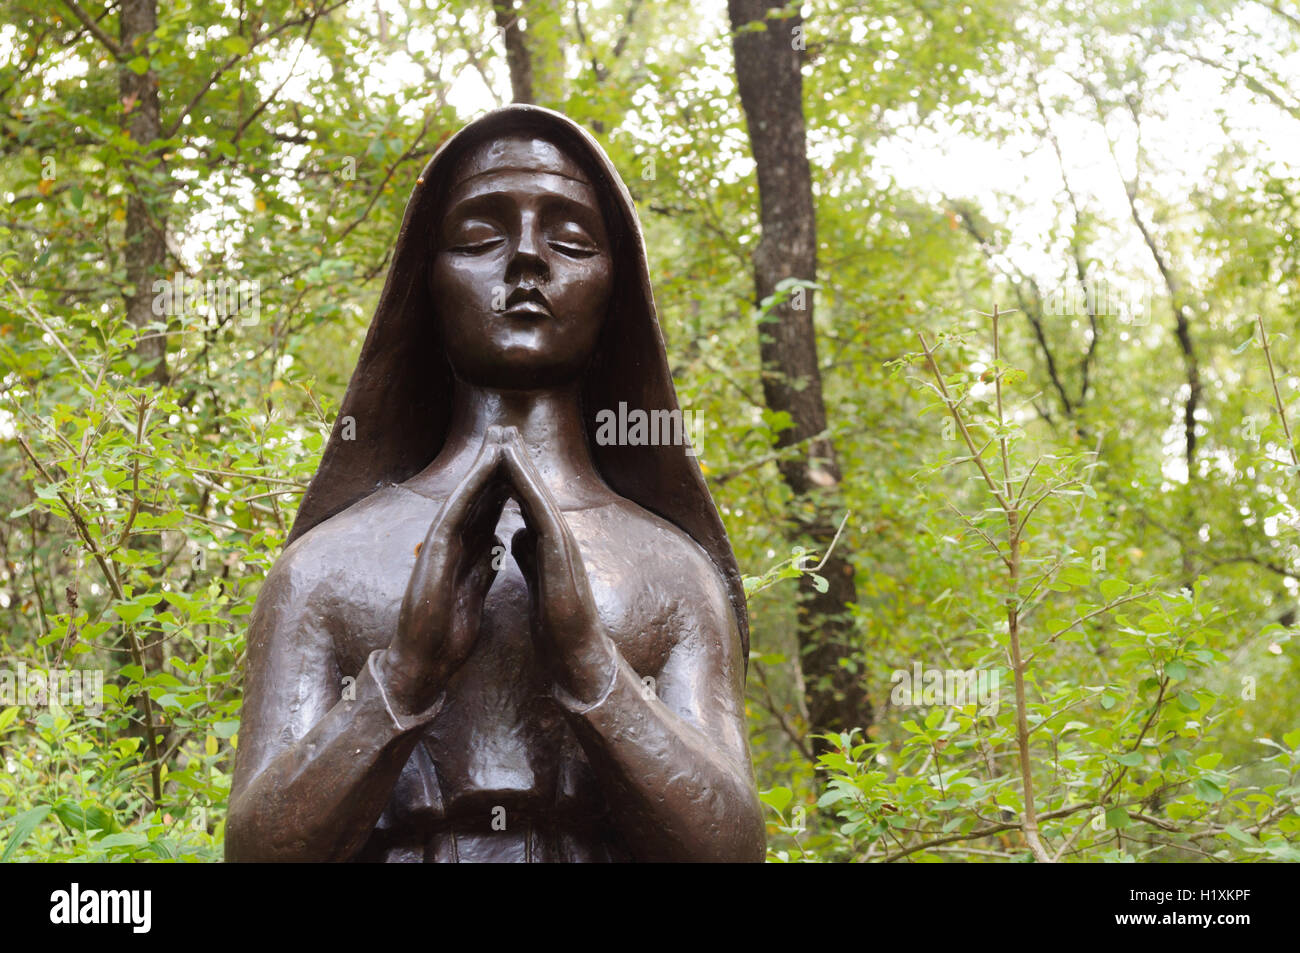 Bronze sculpture of a nun by Charles Umlauf Texas artist. Stock Photo